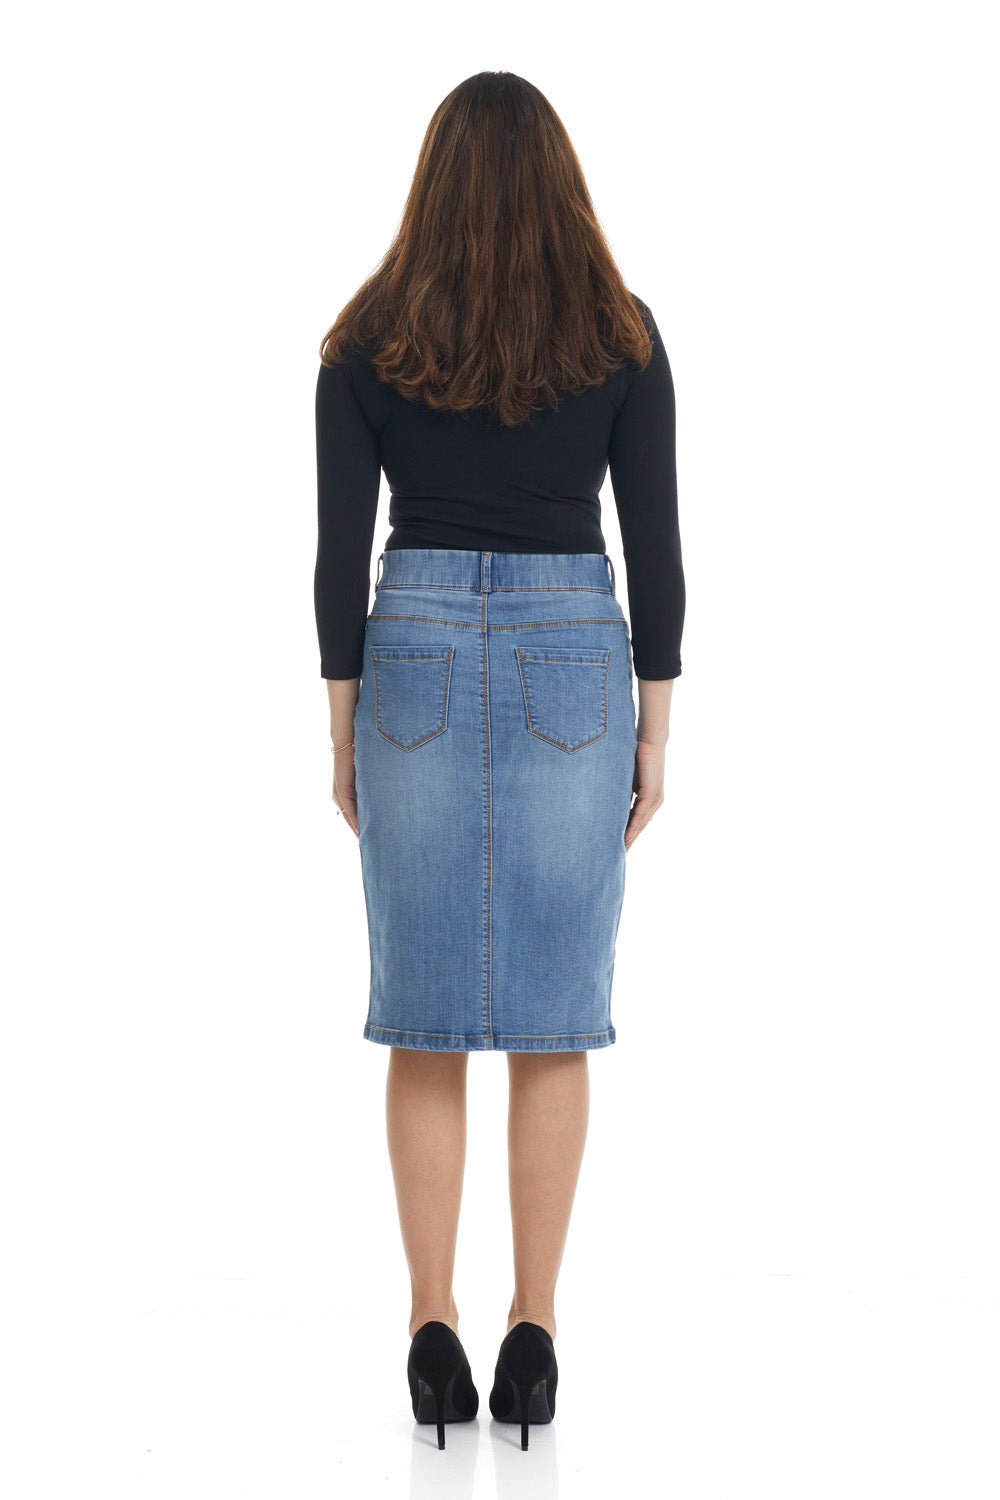 Fashion2Love Womens Plus/Juniors Mid Waist Below Knee Length Denim Skirt in  Pencil Silhouette - Walmart.com